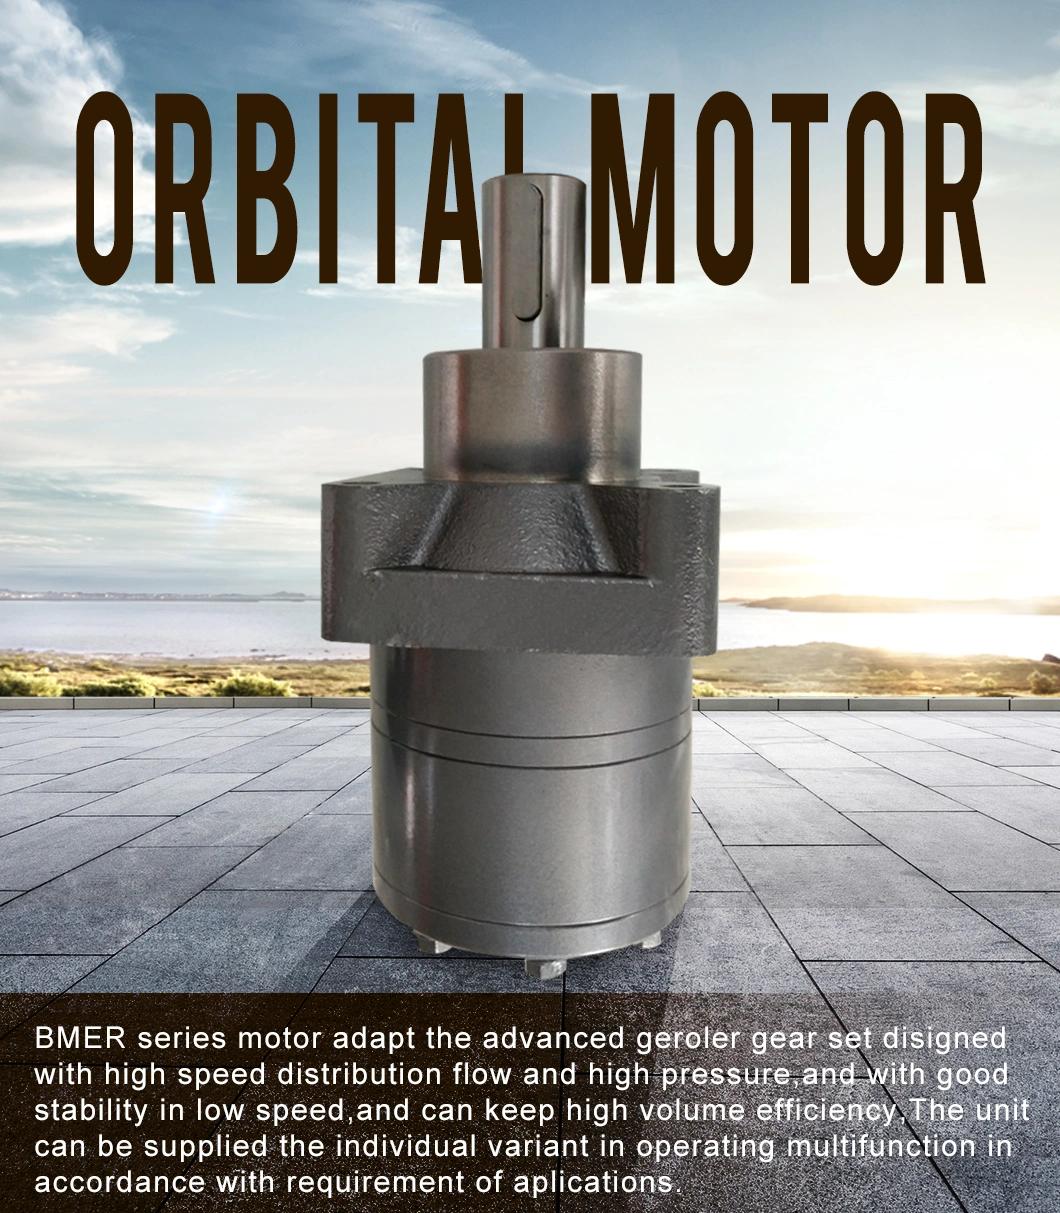 Wood Chipper Hydraulic Motor Bmer 750 Orbitol Motor Oil Pump